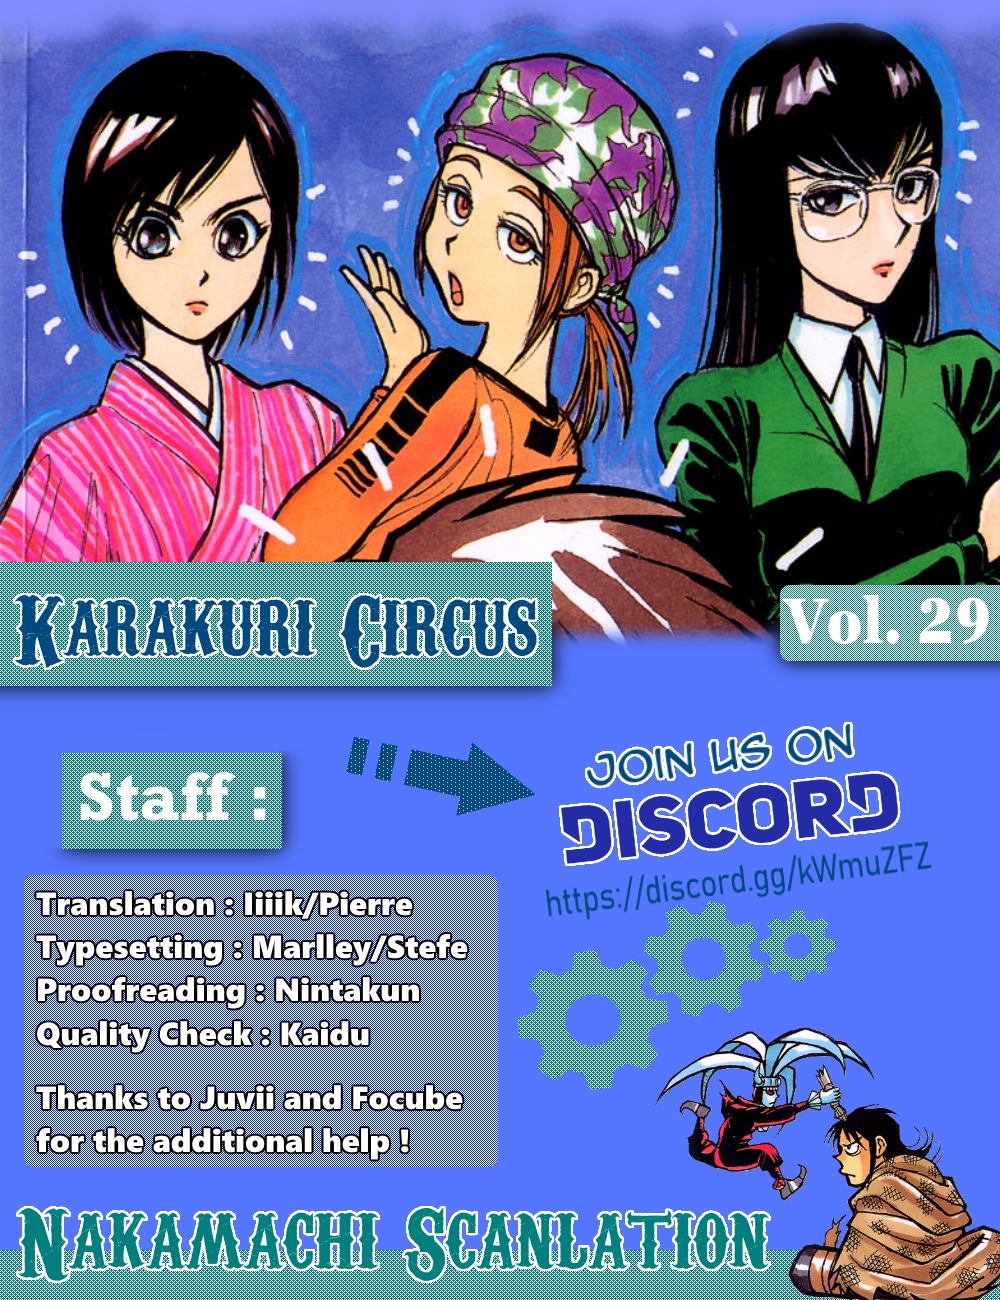 Karakuri Circus Chapter 285: Main Part - Welcome To The Kuroga Village - Act 3: Reasons - Picture 1